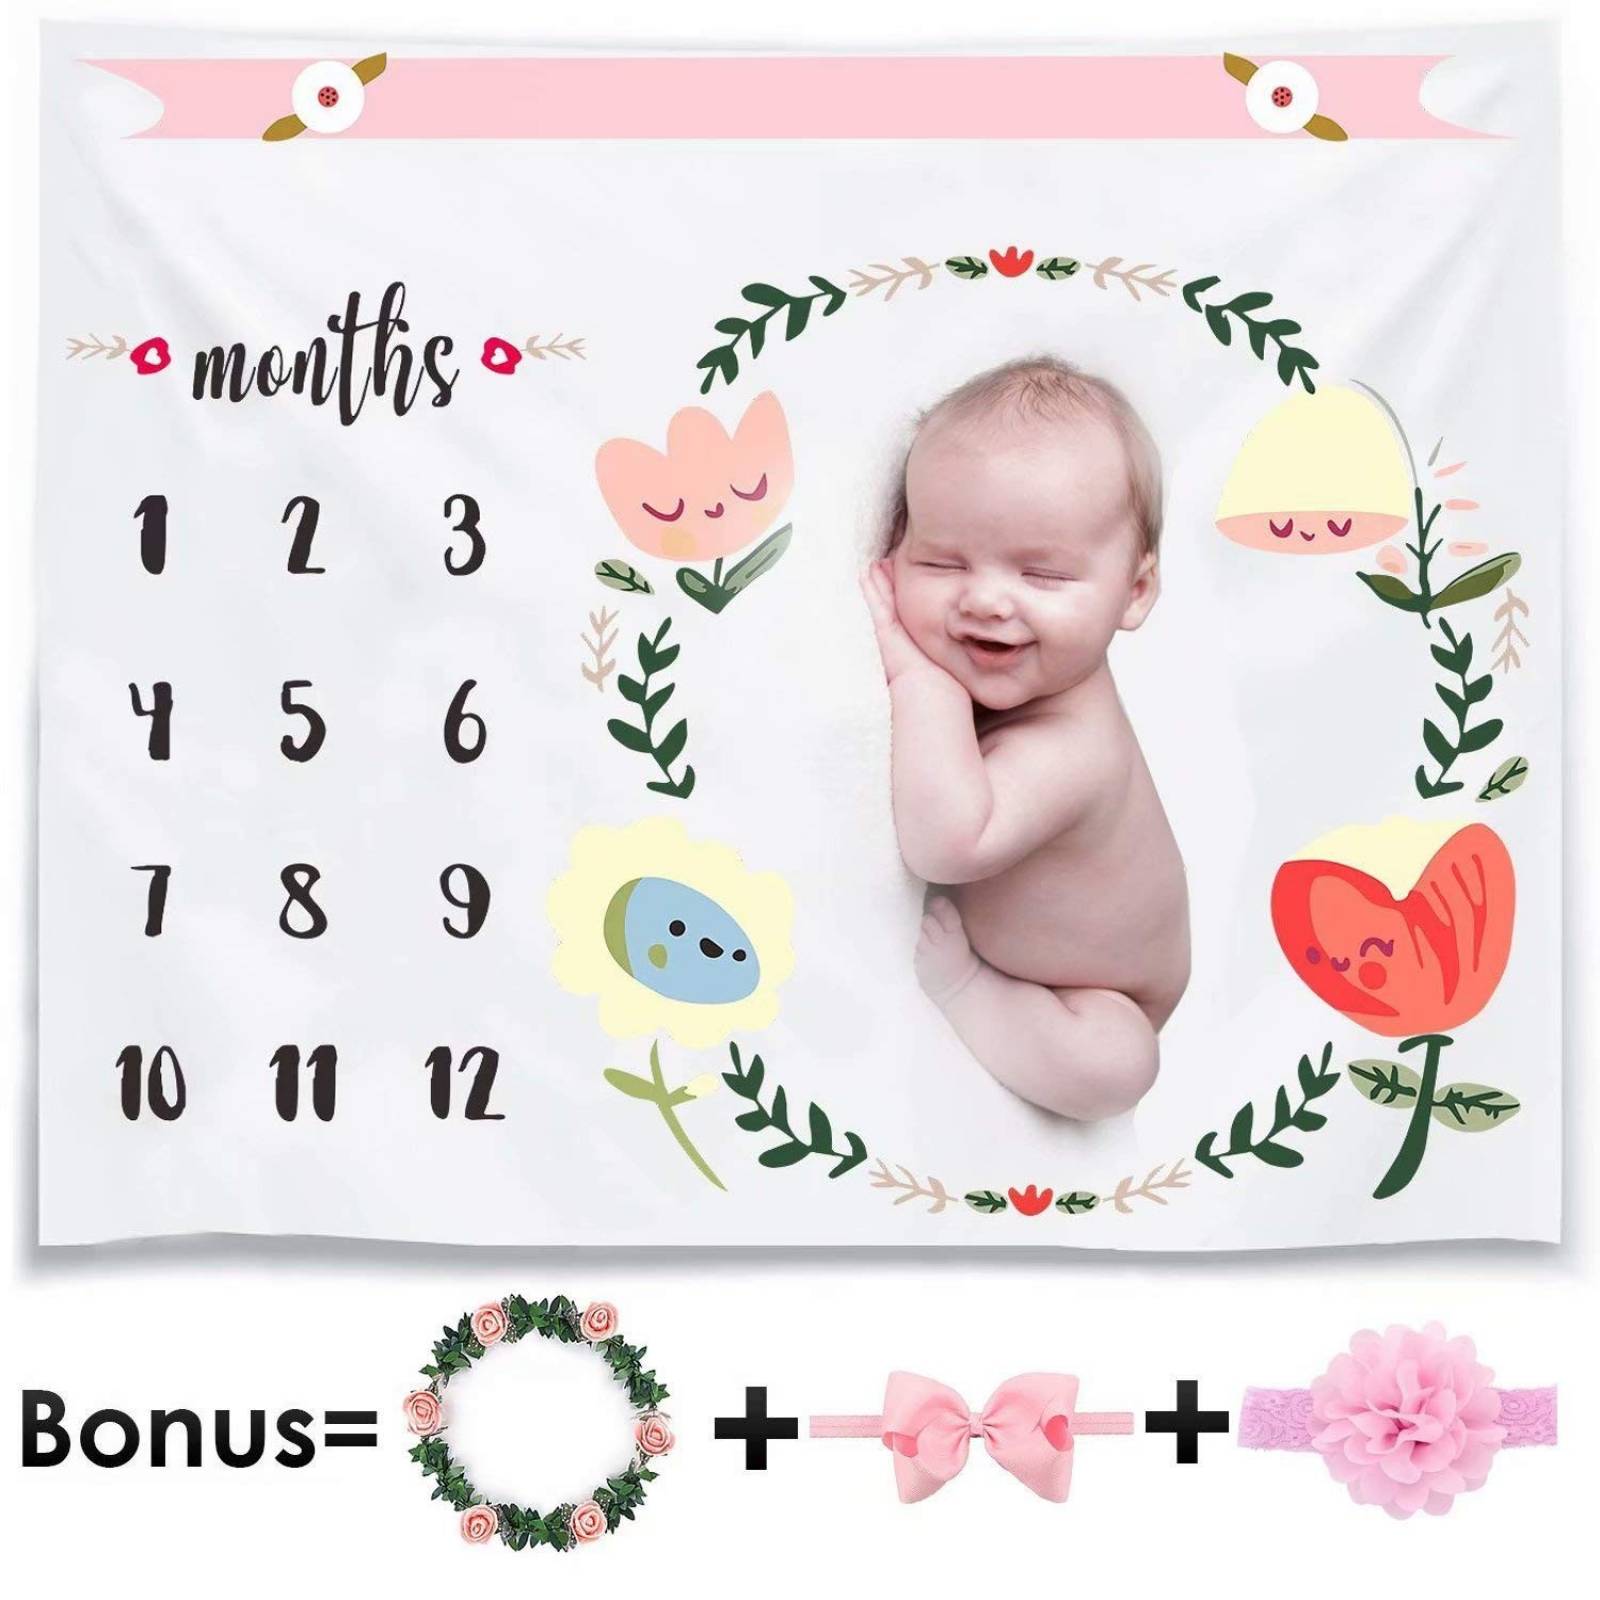 Manta Paddsun foto recuerdo mensual de bebé banda floral